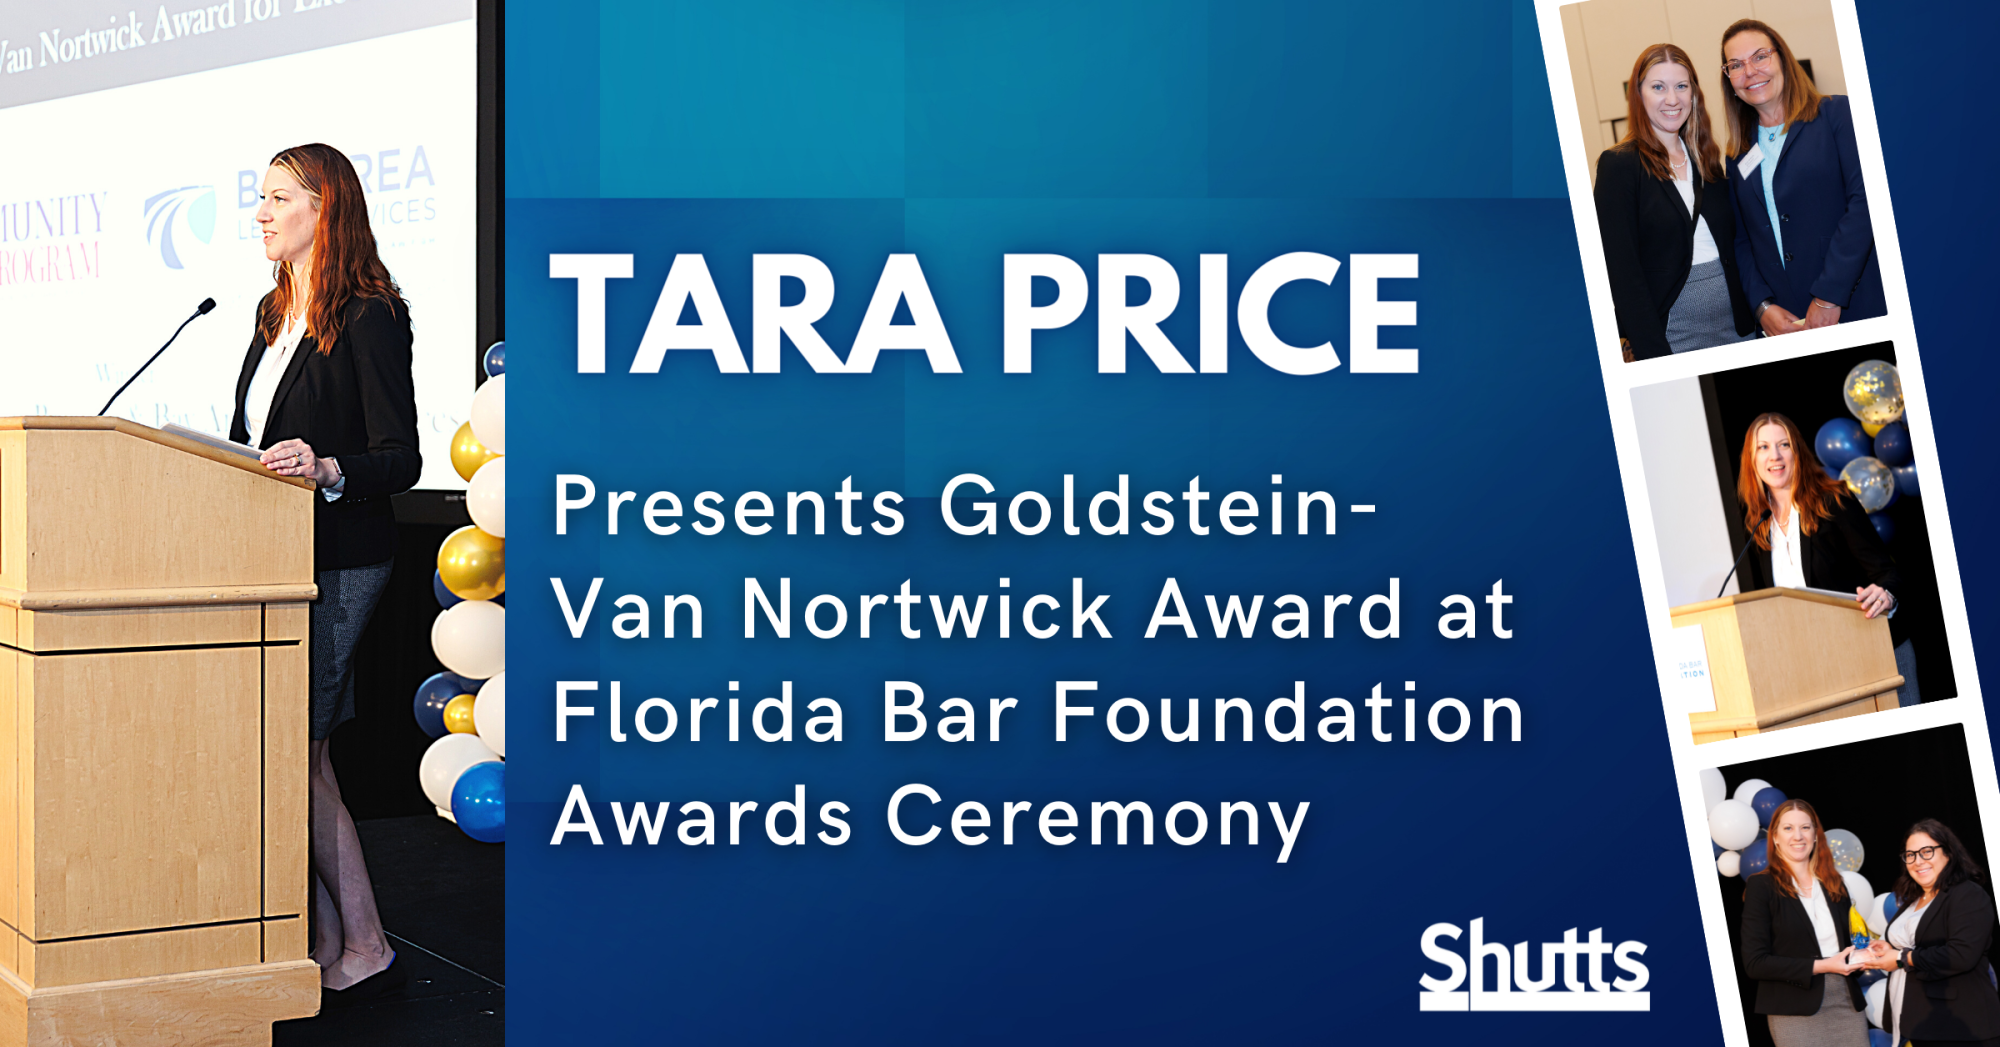 Tara Price Presents Goldstein-Van Nortwick Award at Florida Bar Foundation Awards Ceremony